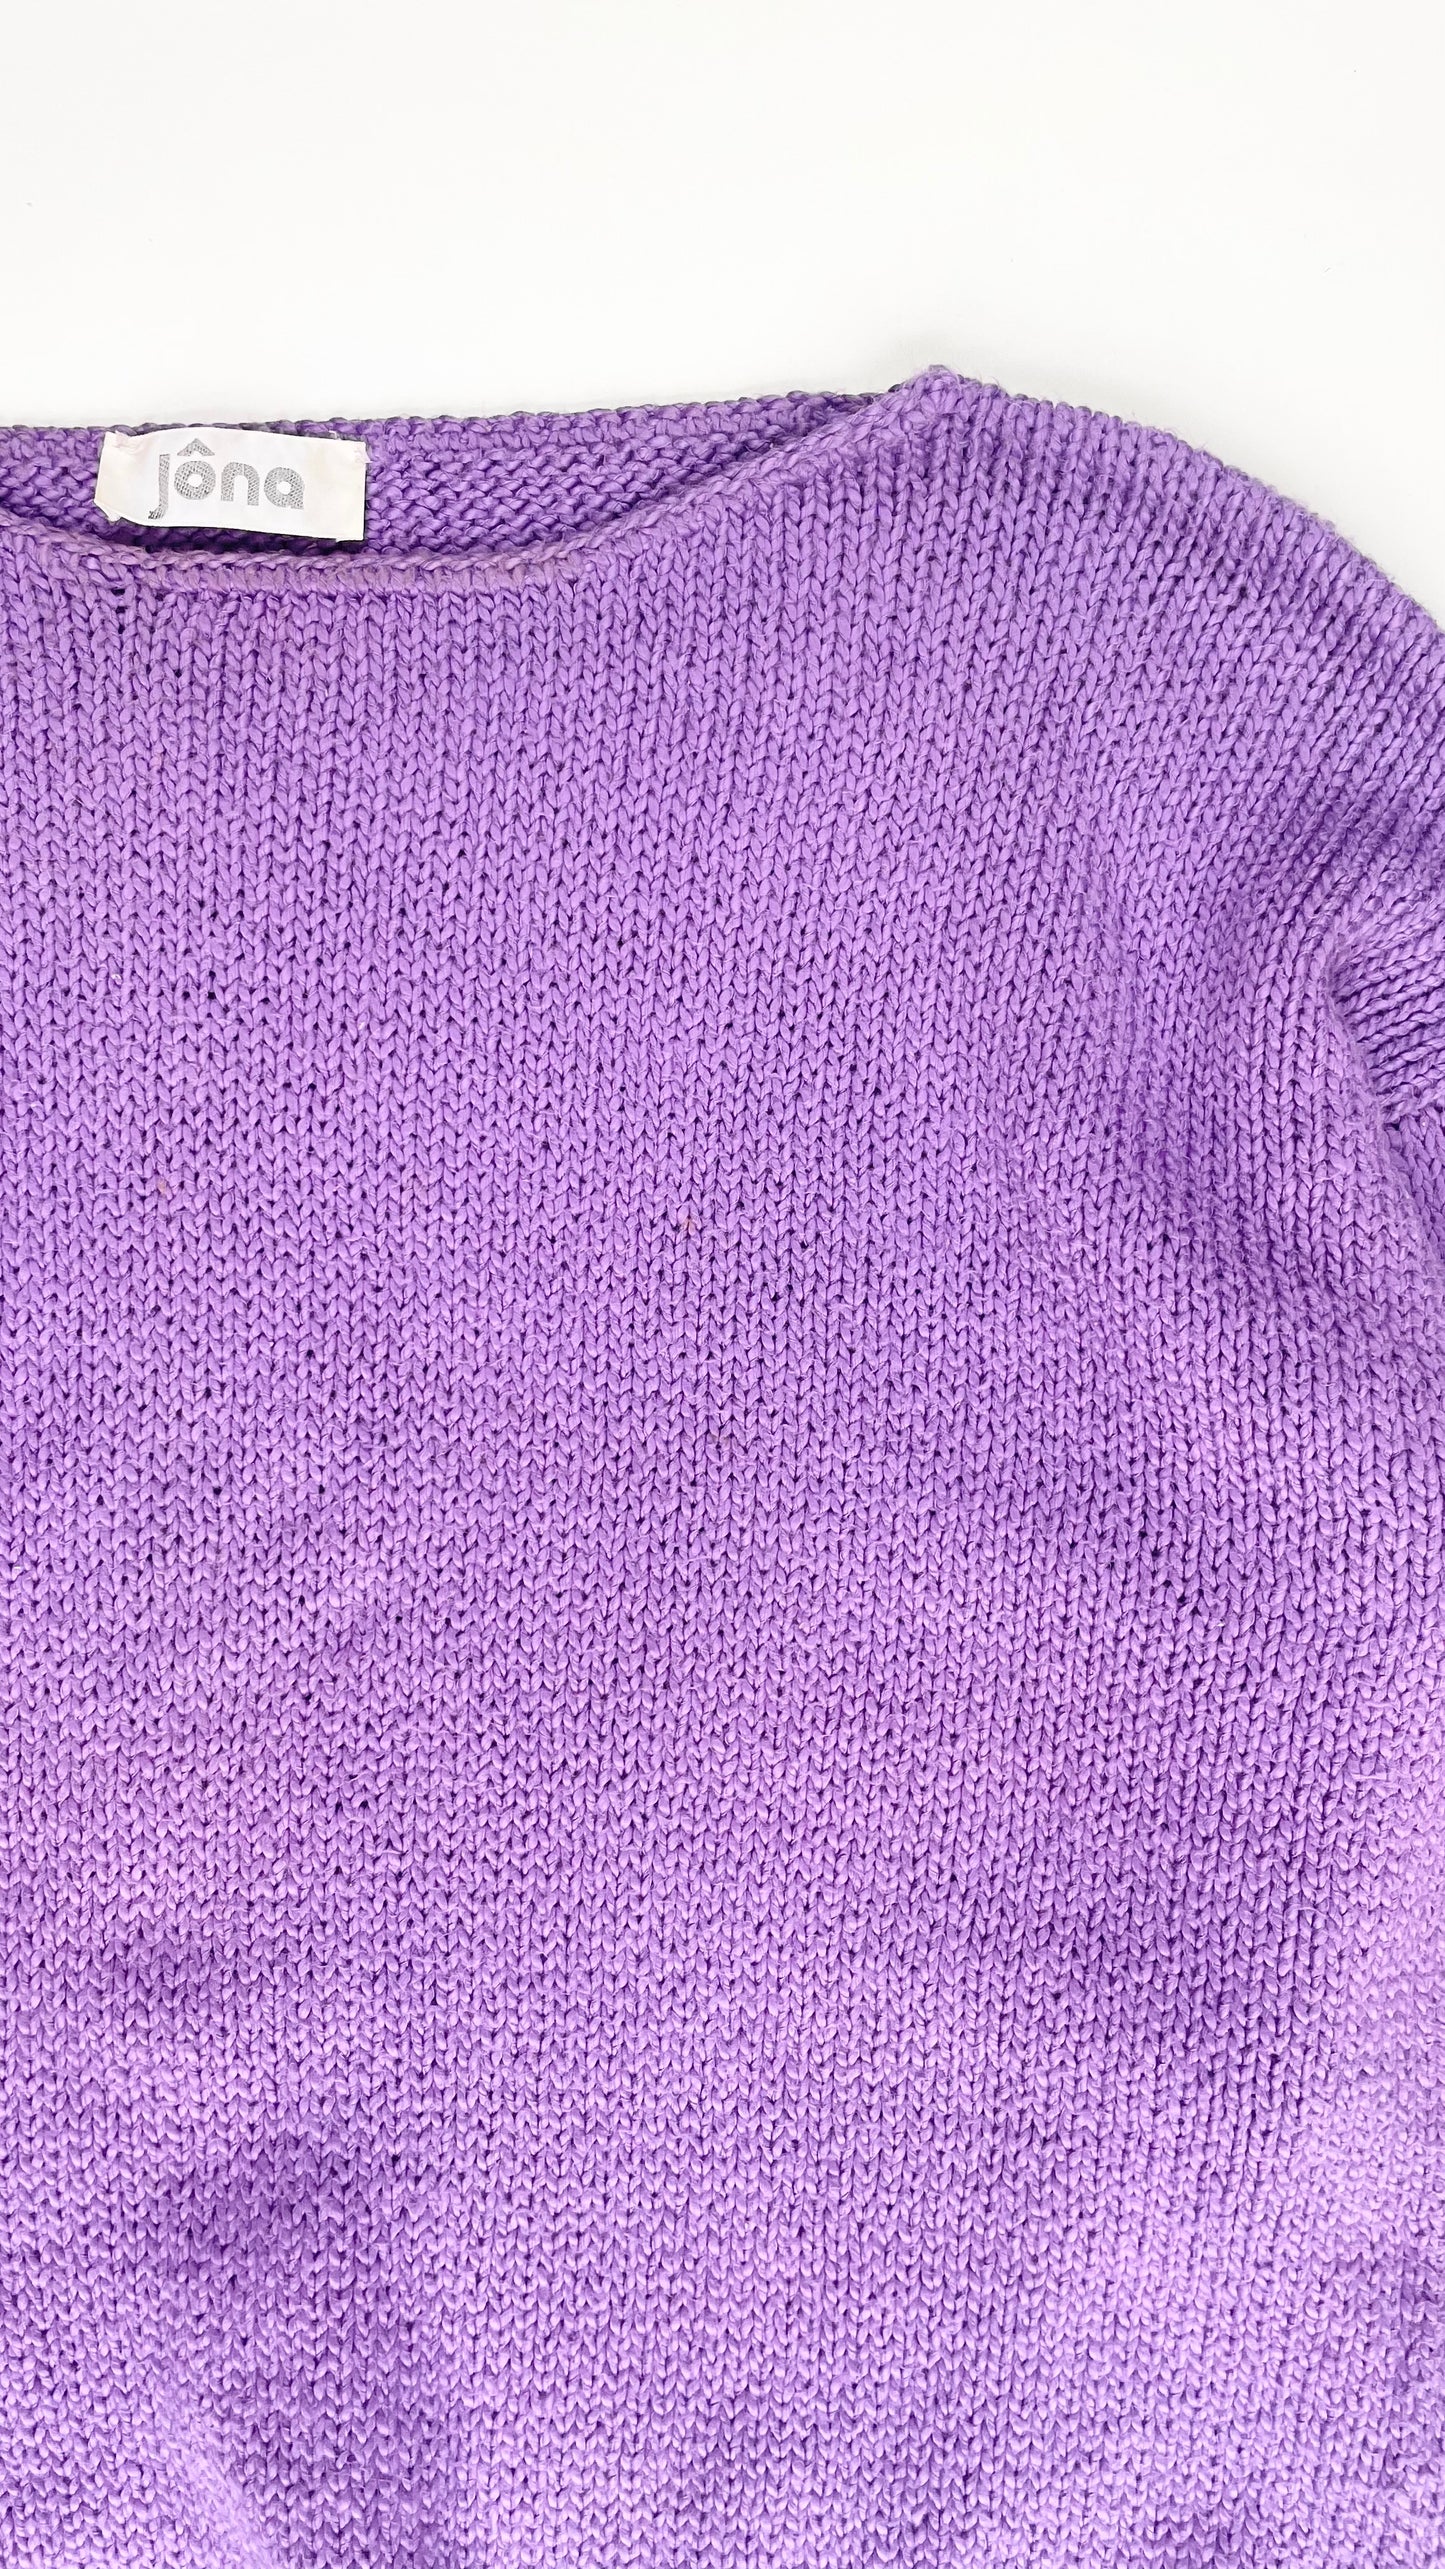 Vintage 90s purple knit sweater- Size M